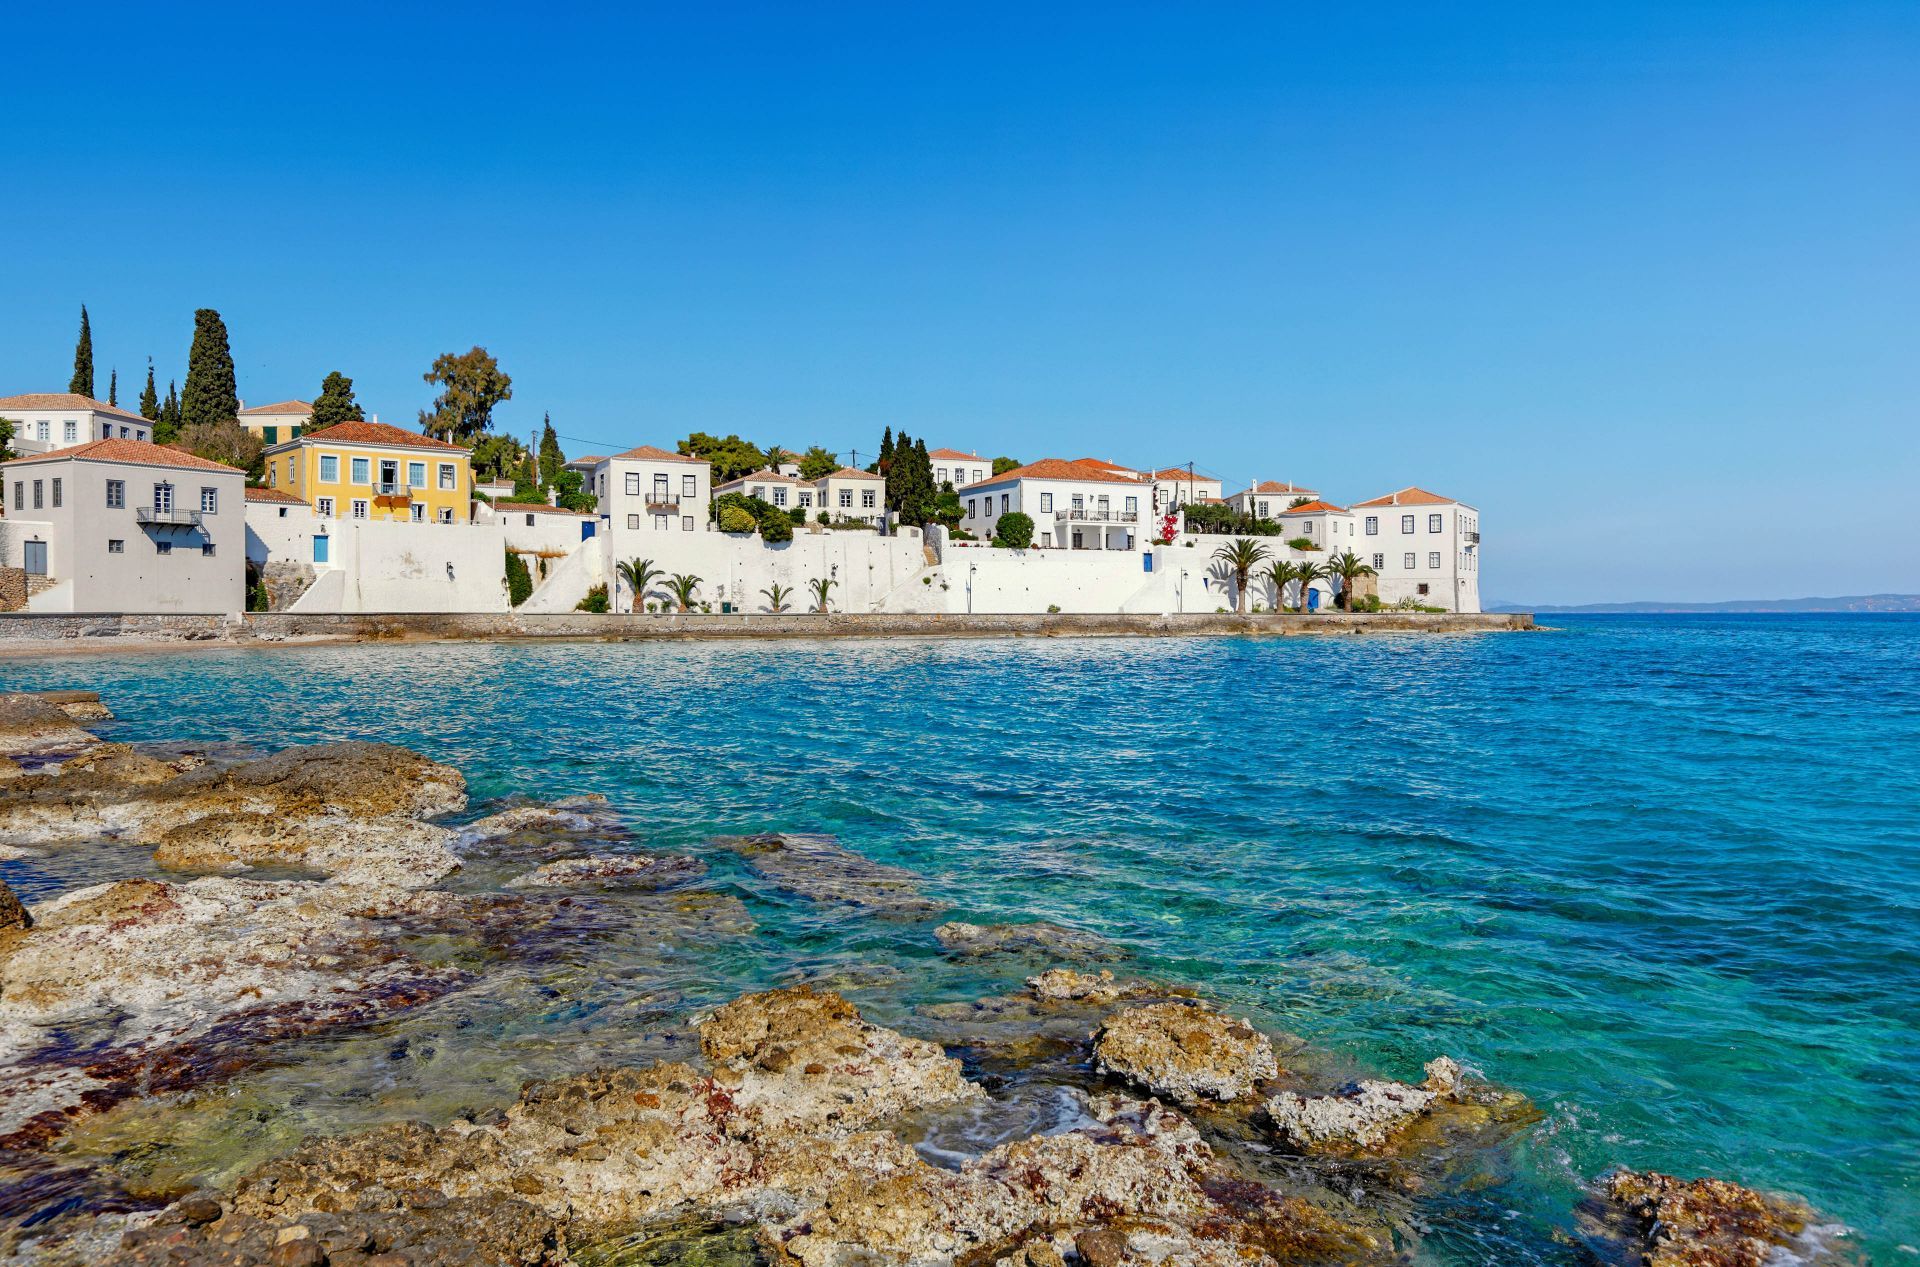 Spetses island: Town